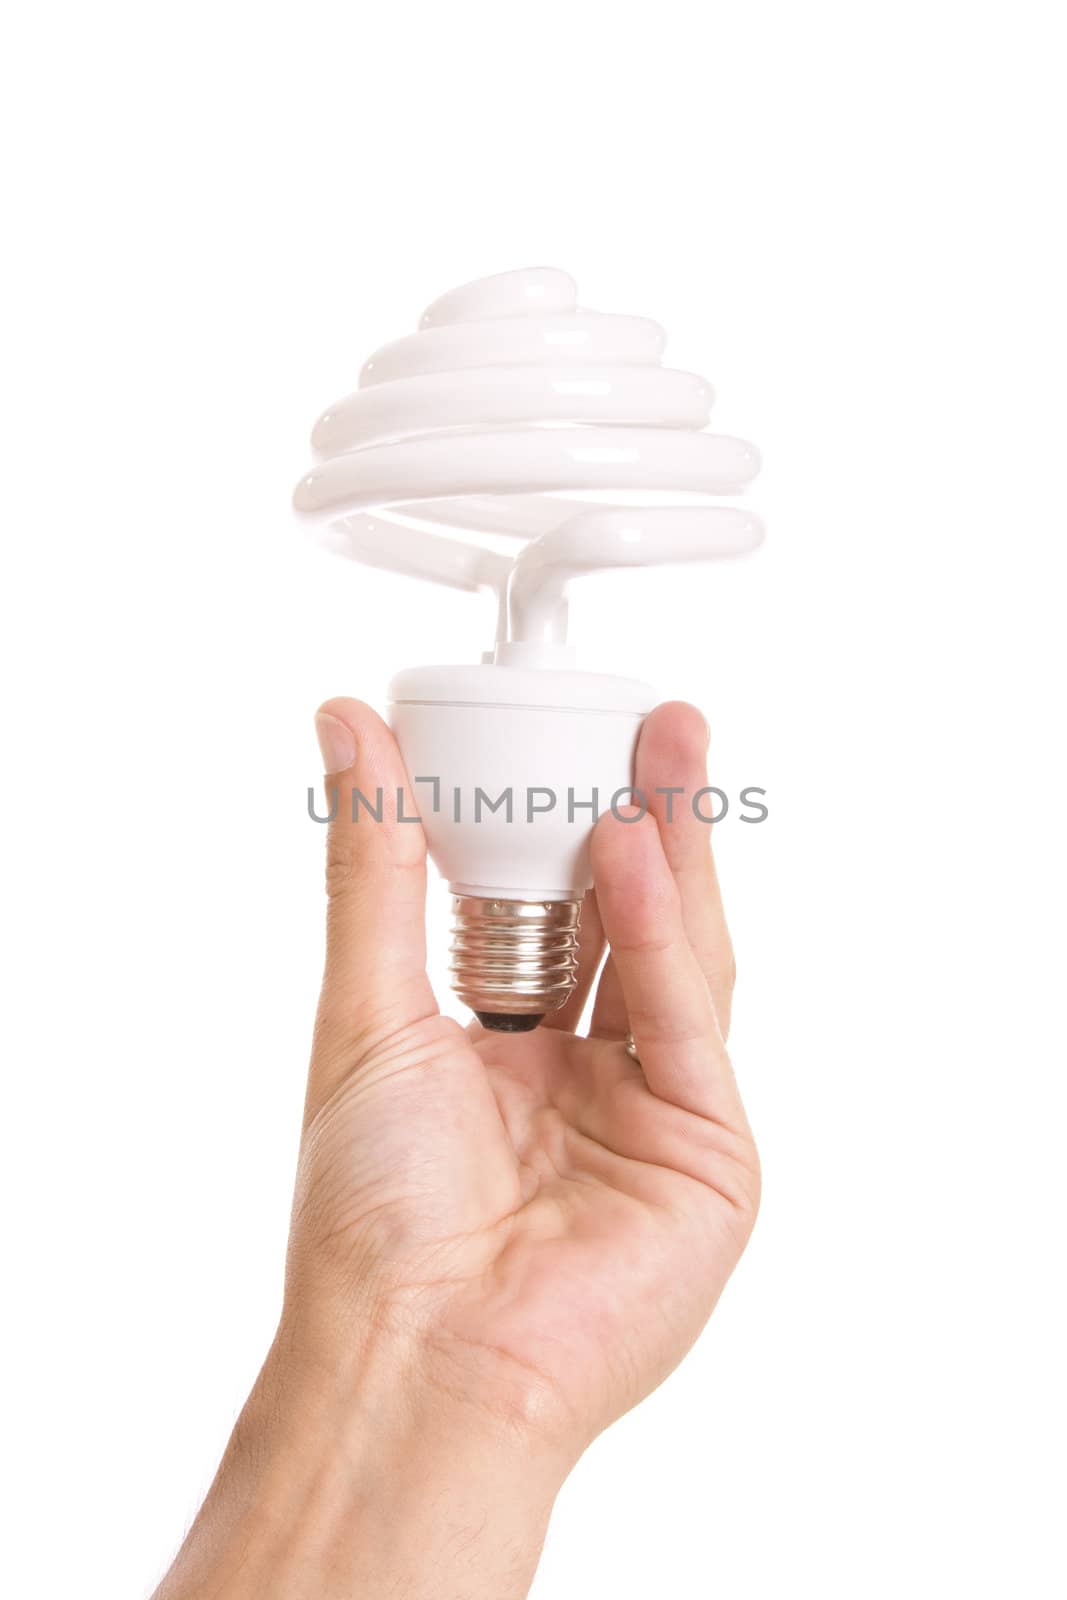 hand with light bulb